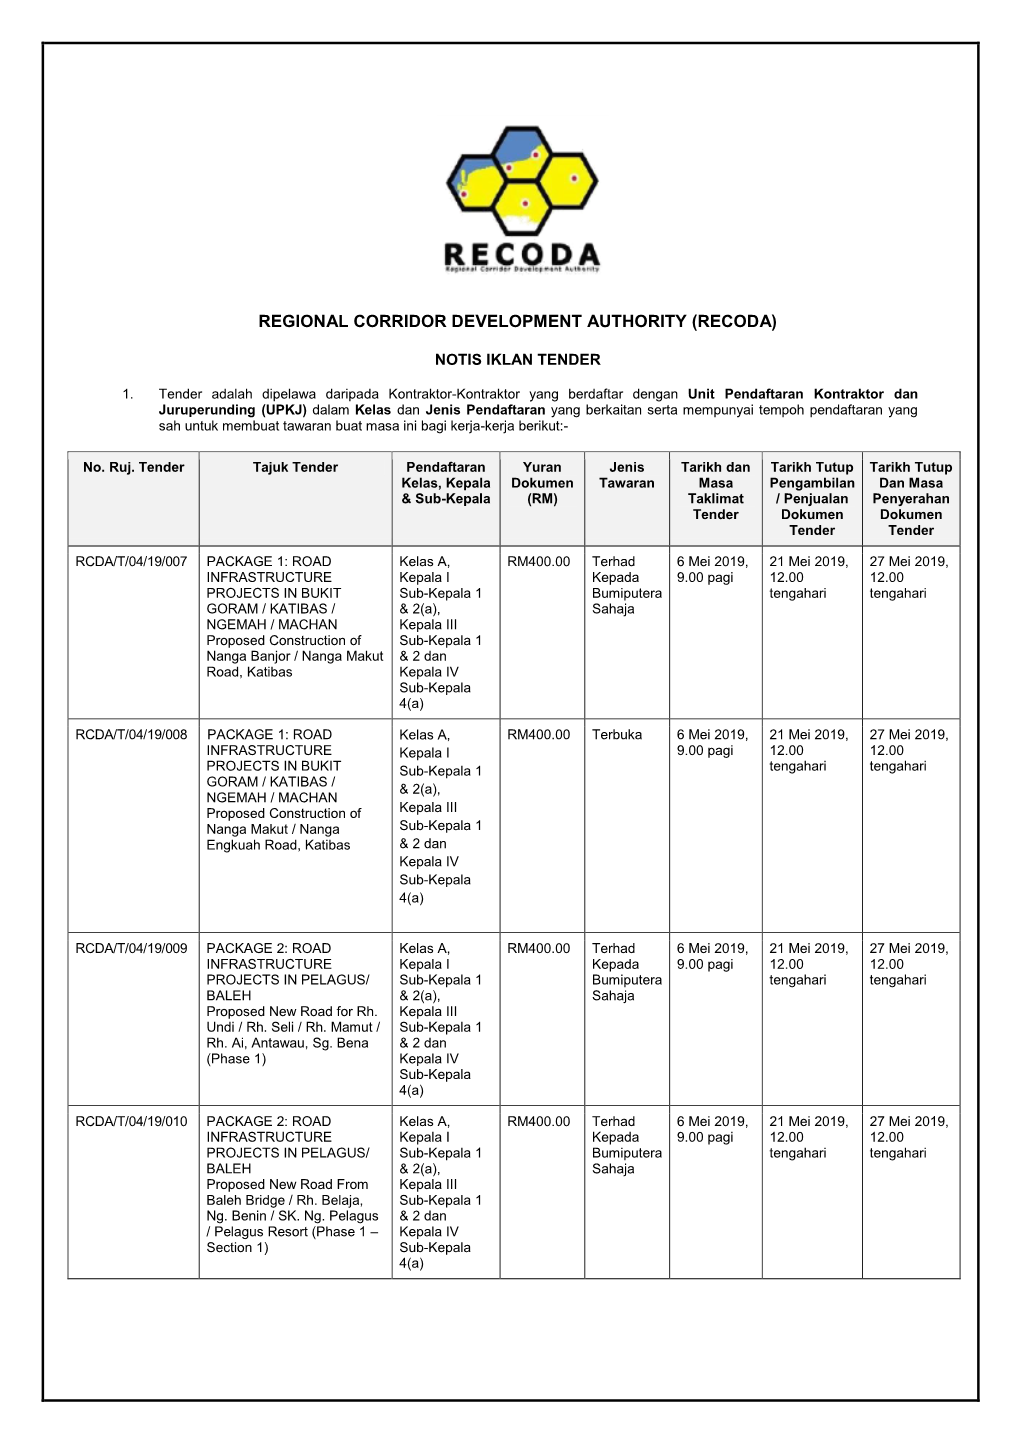 Regional Corridor Development Authority (Recoda)